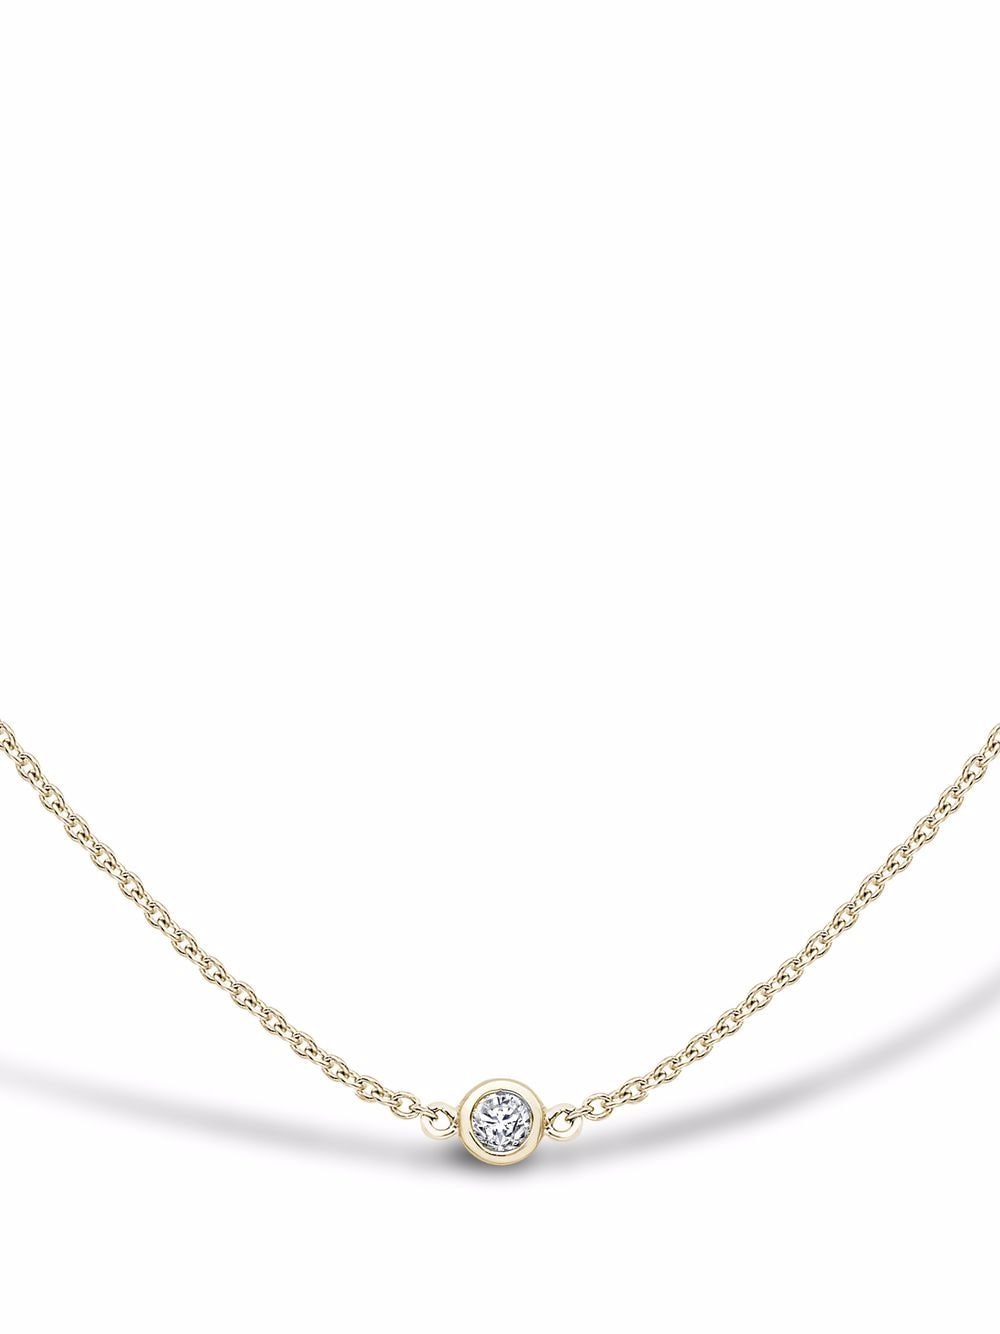 18kt yellow gold Sundance diamond necklace